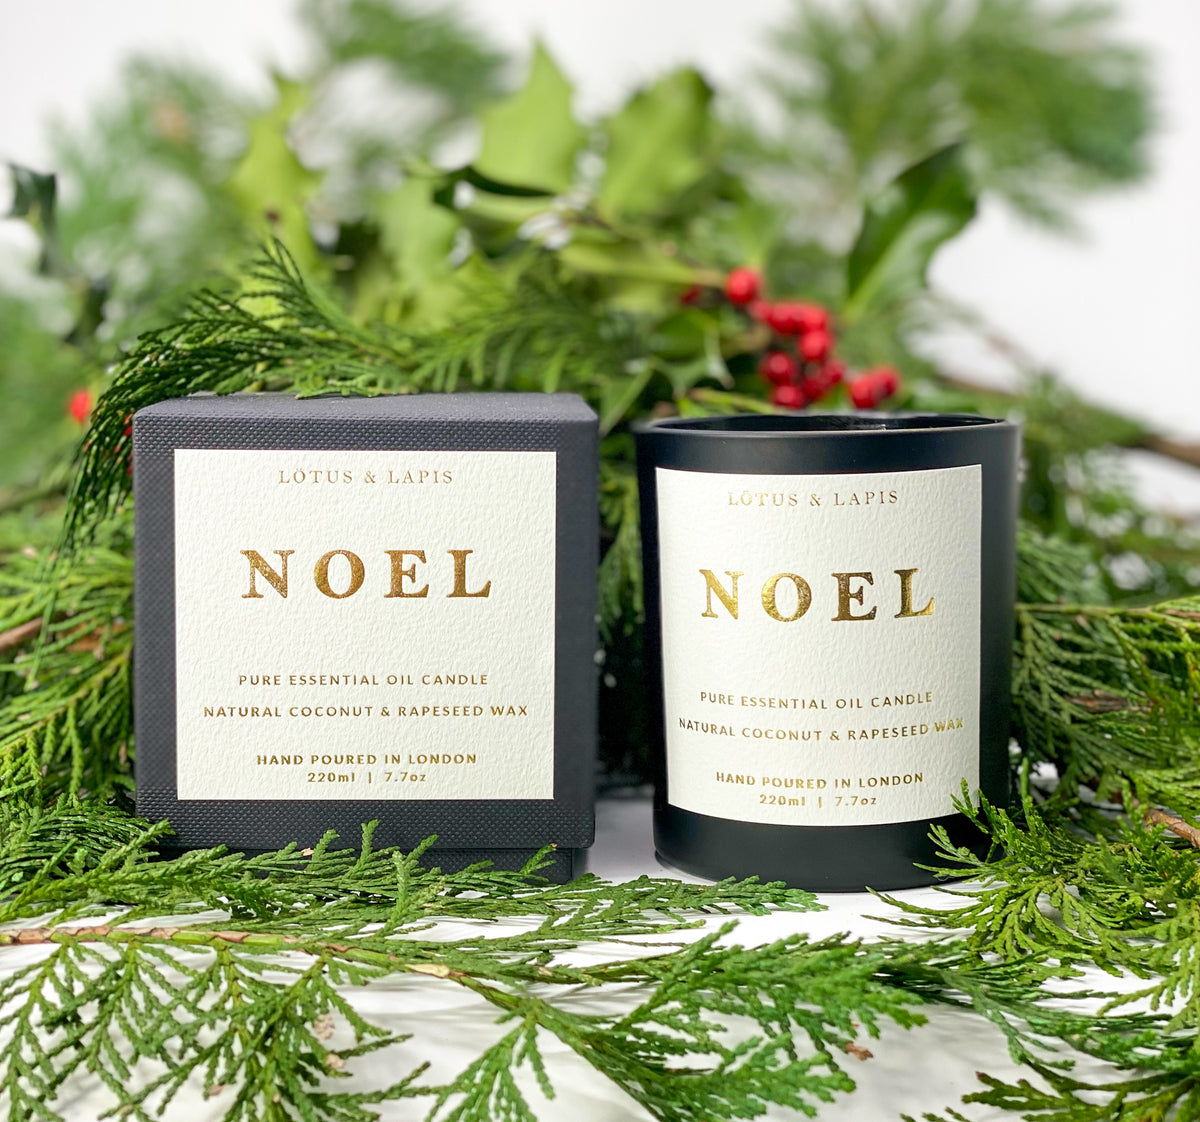 Our Noel Christmas candle smells divine. It is a combination of Mandarin, Orange, Lemon, Nutmeg, Cinnamon, Clove, Cardamon, Patchouli, Tonka Bean and Vanilla.